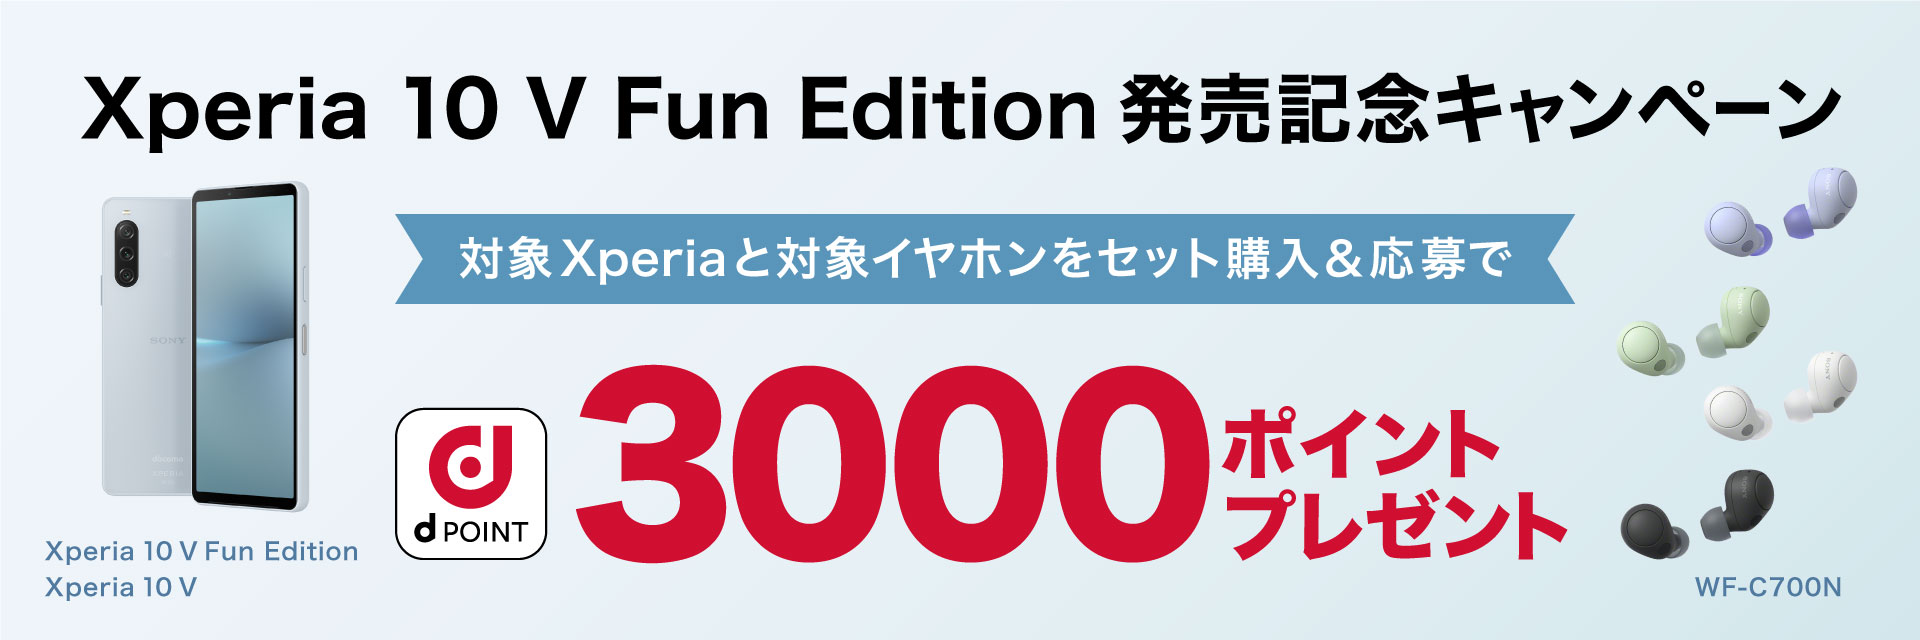 Xperia 10 V Fun Edition 発売記念キャンペーン 対象Xperiaと対象イヤホンをセット購入＆応募で dポイント 3000ポイントプレゼント Xperia 10 V Fun Edition Xperia 10 V WF-C700N